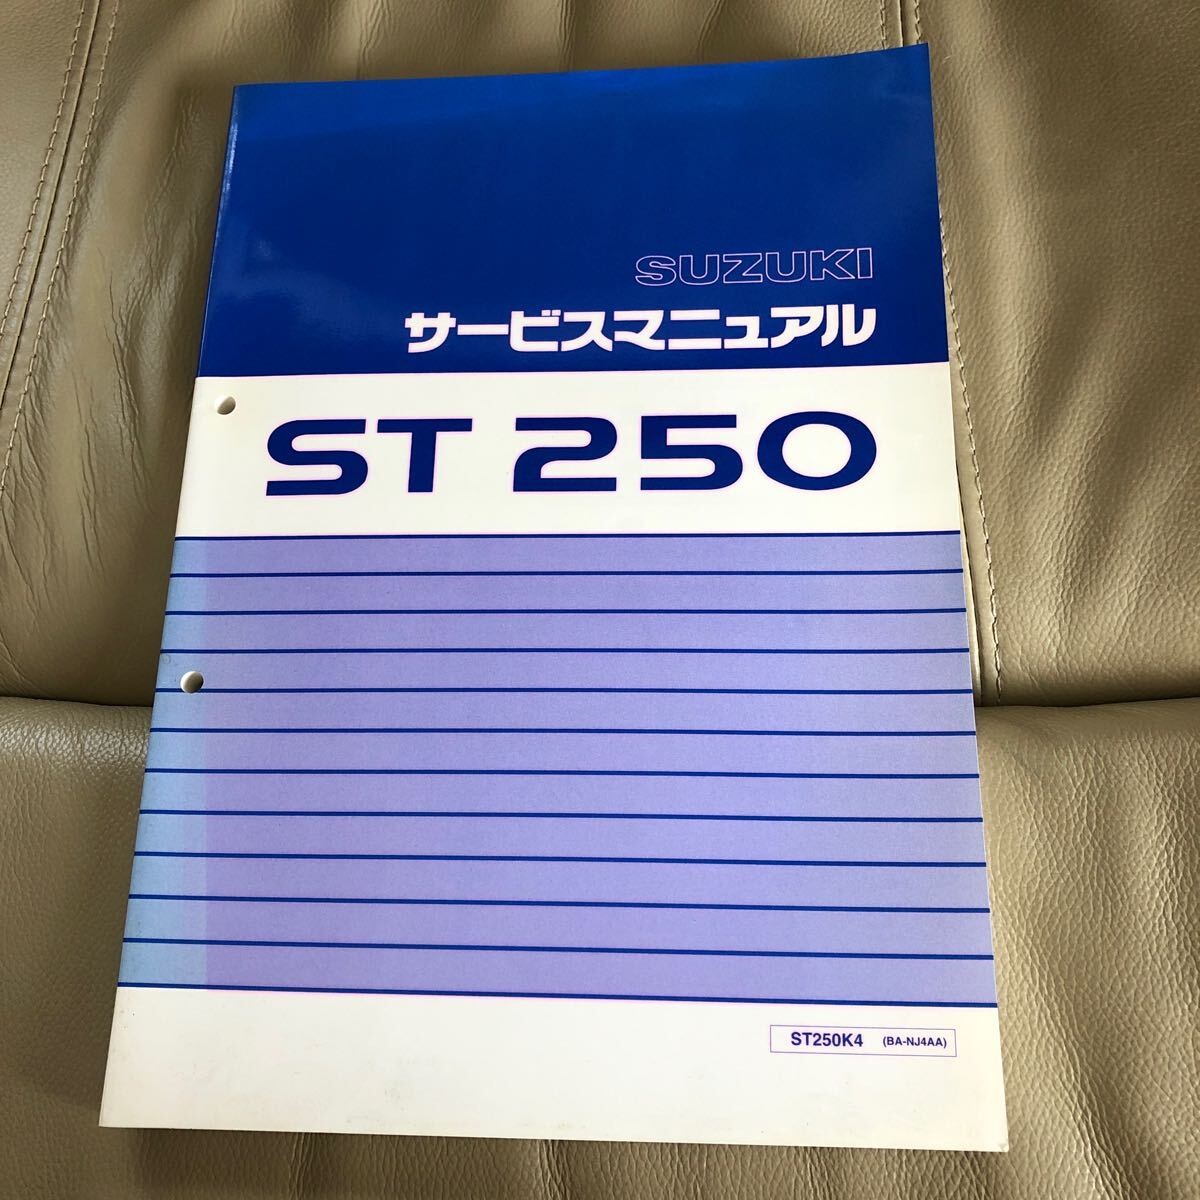 SUZUKI ST250 (BA-NJ4AA) руководство по обслуживанию б/у 